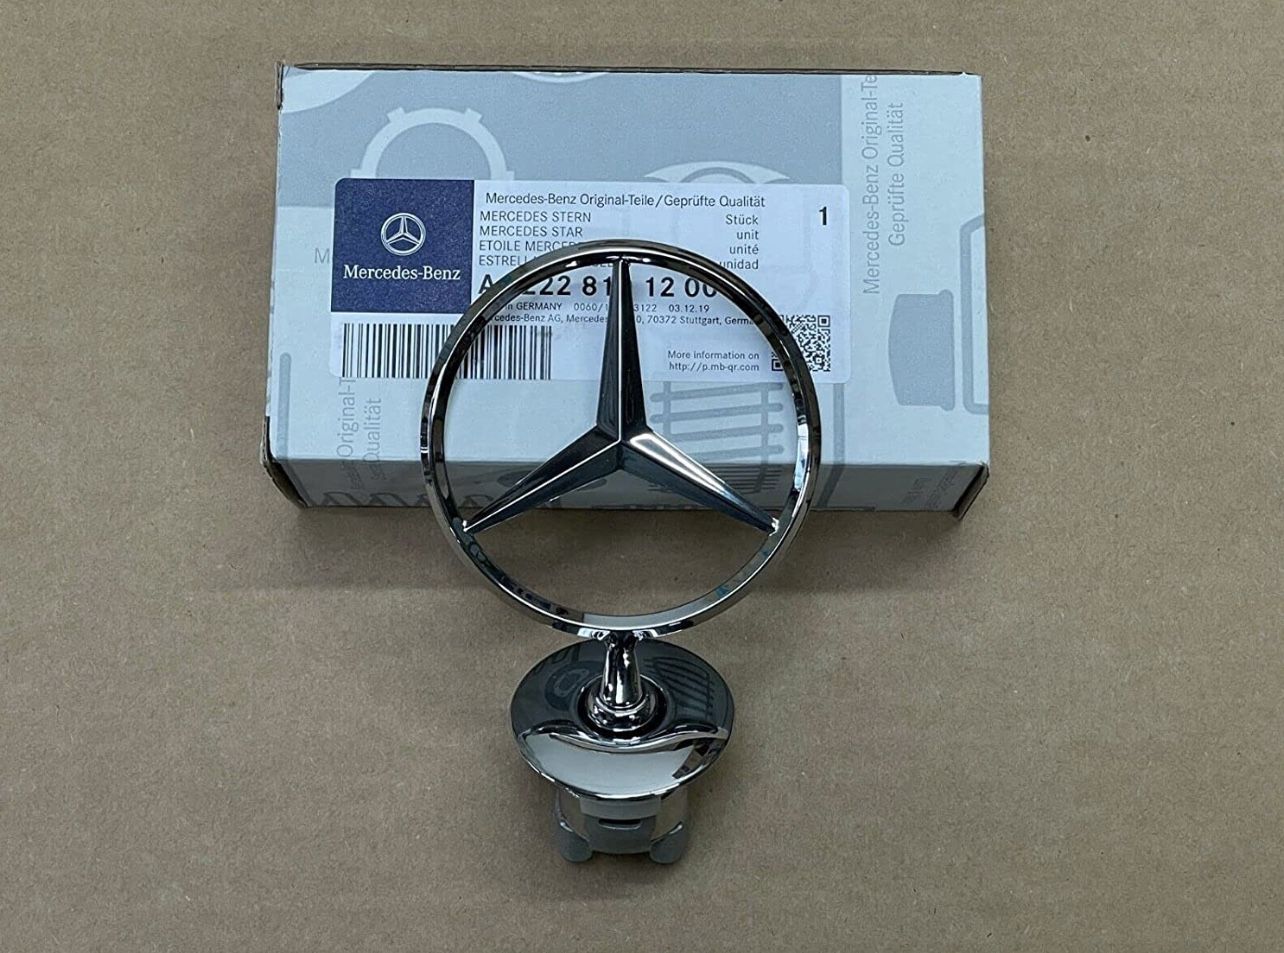 Mercedes Benz Genuine Vehicle Hood Star Emblem Badge